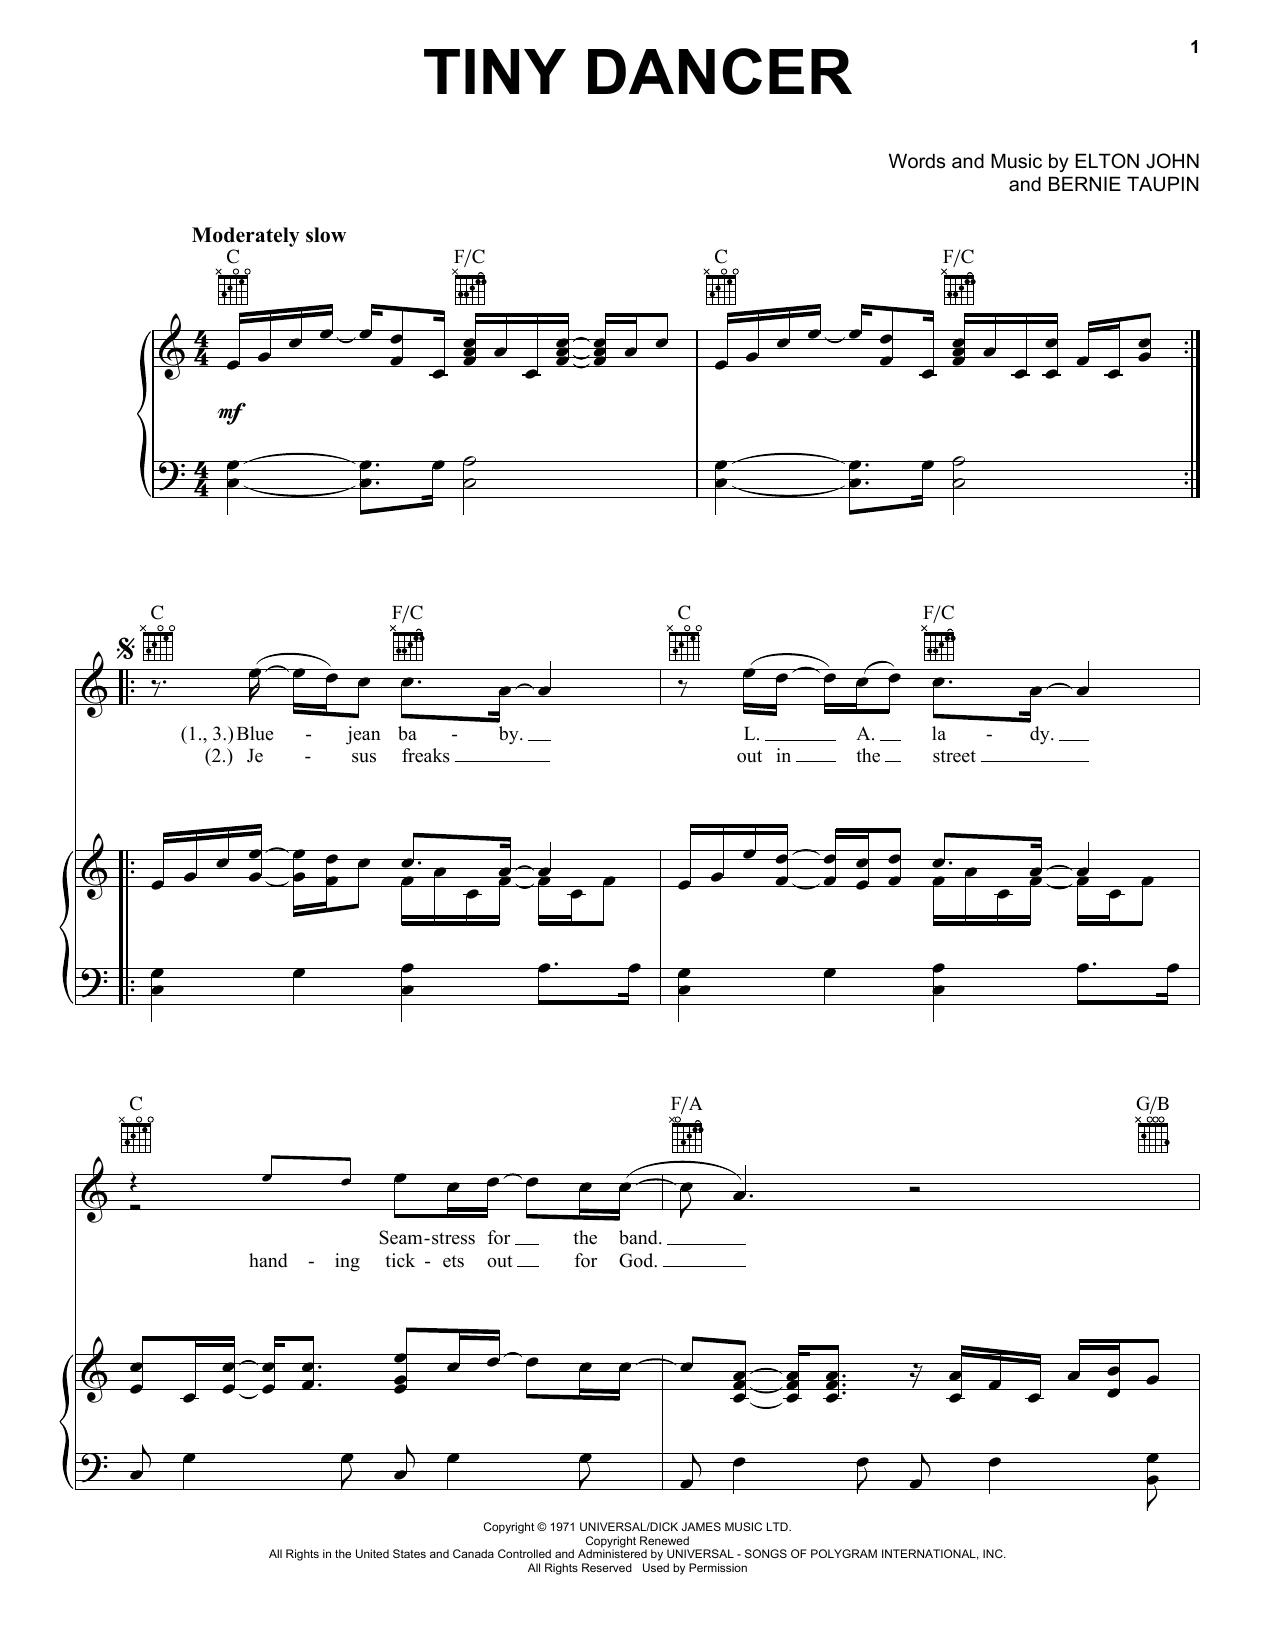 Elton John Tiny Dancer Sheet Music Notes & Chords for Vocal Pro + Piano/Guitar - Download or Print PDF